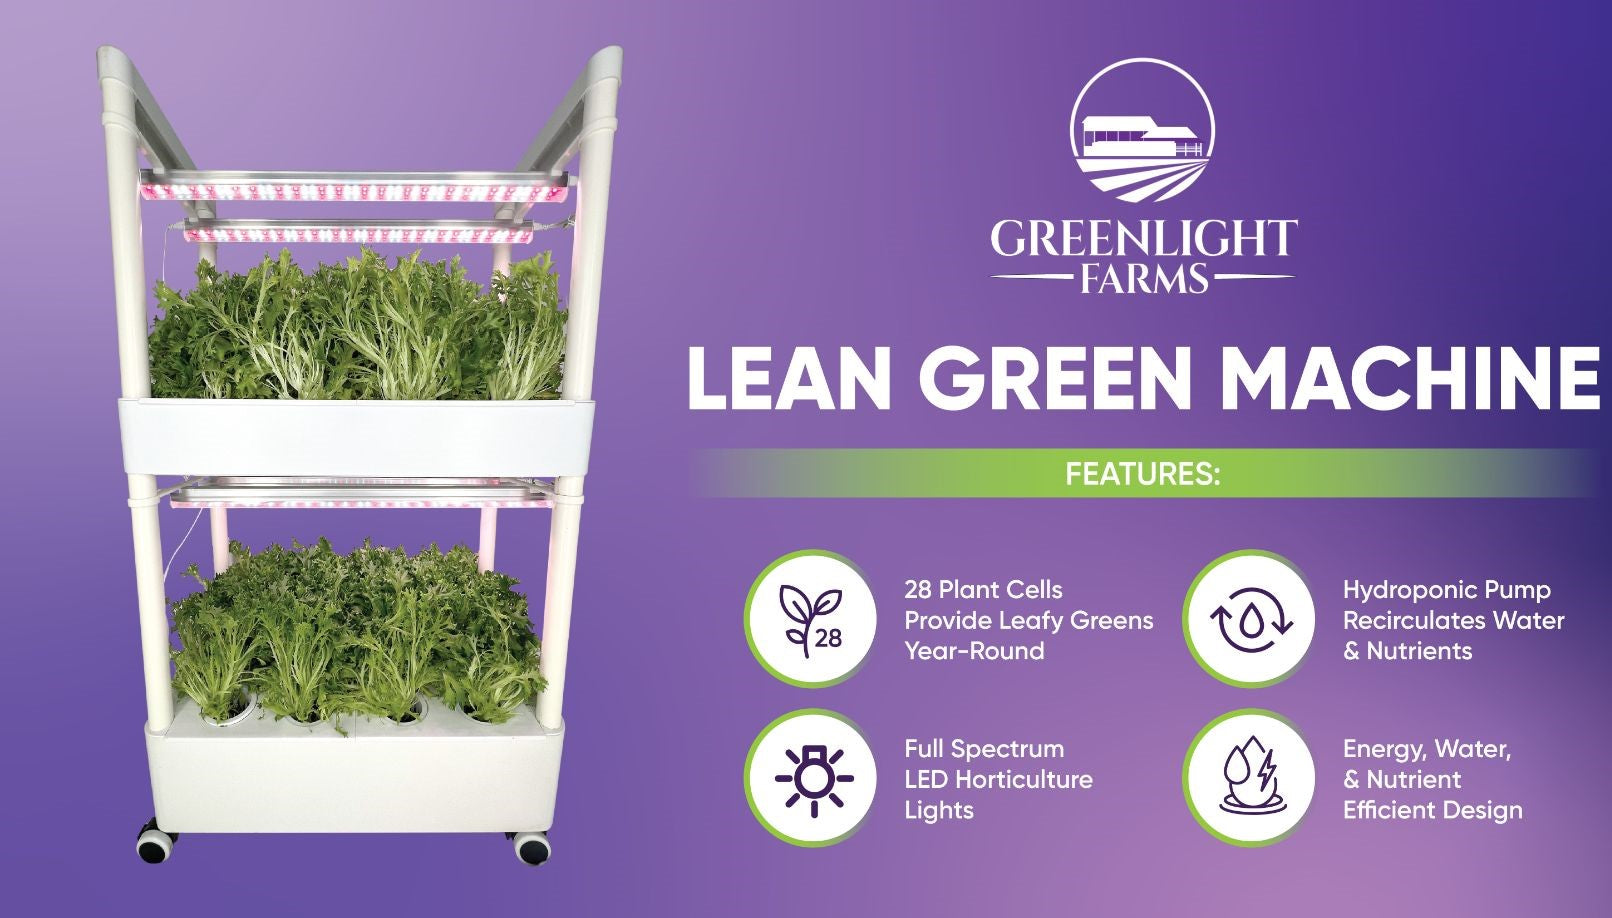 Lean Green Machine - 2 Tier - Greenlight Farms